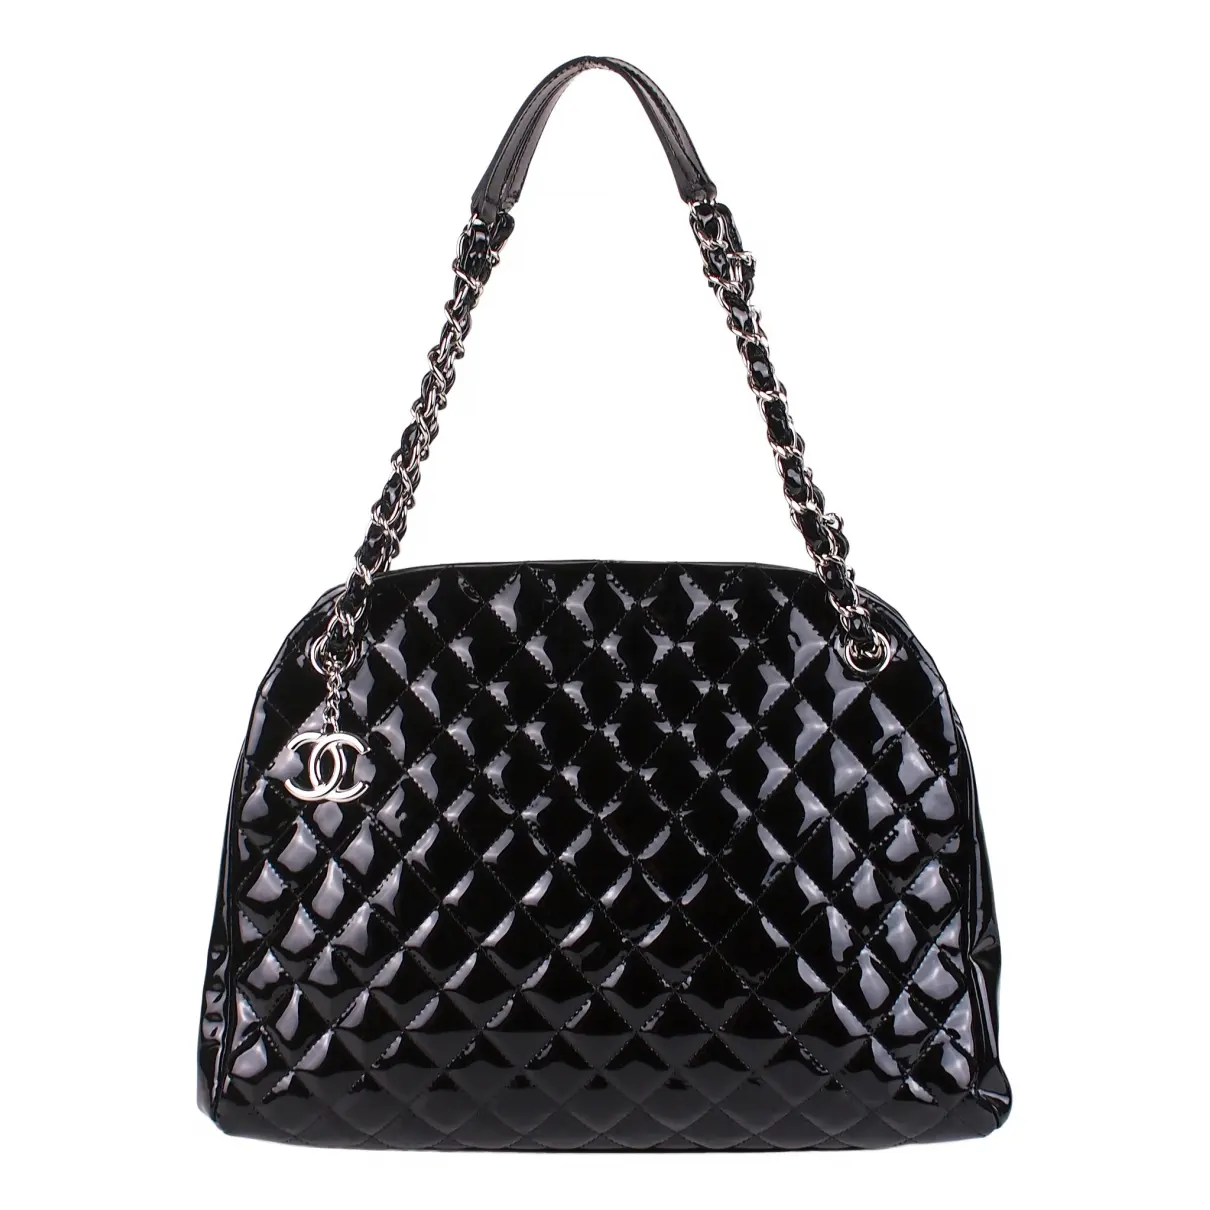 Mademoiselle patent leather handbag Chanel